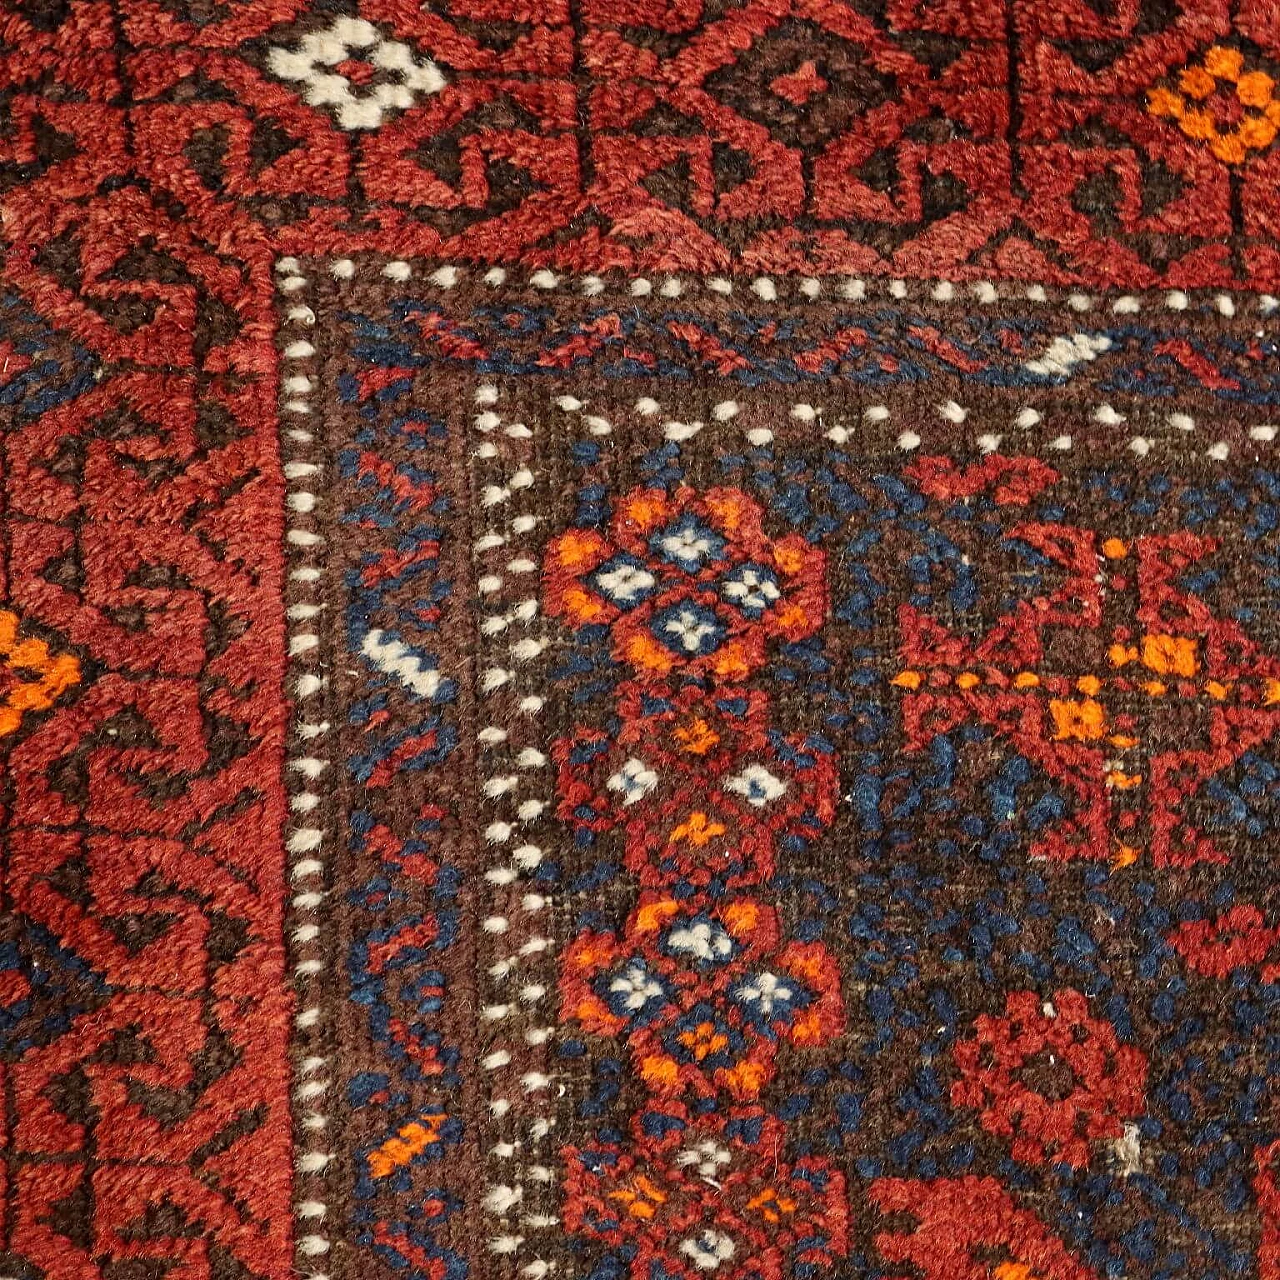 Iranian red, blue and orange wool Beluchi rug 5